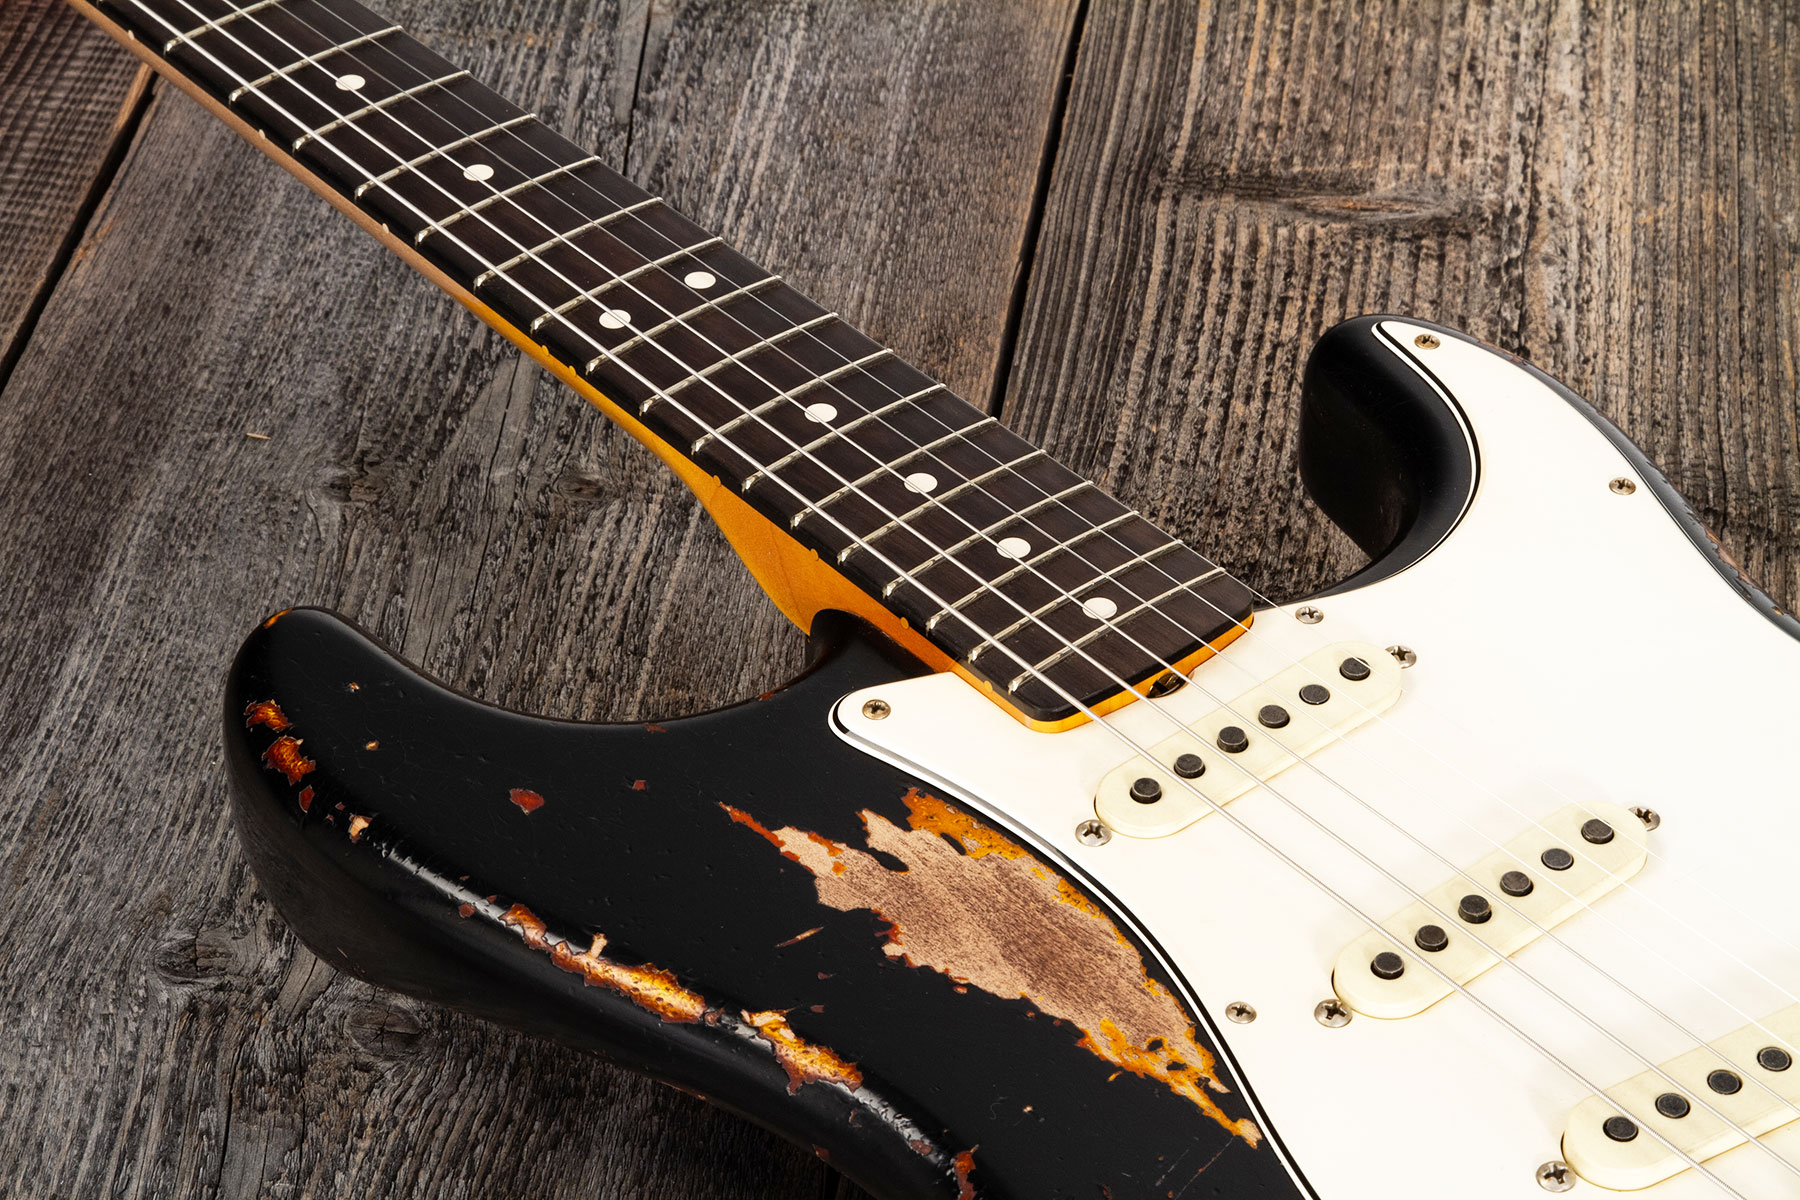 Fender Custom Shop Strat 1963 Masterbuilt K.mcmillin 3s Trem Rw #r127357 - Heavy Relic Black Ov. 3-color Sunburst - E-Gitarre in Str-Form - Variation 